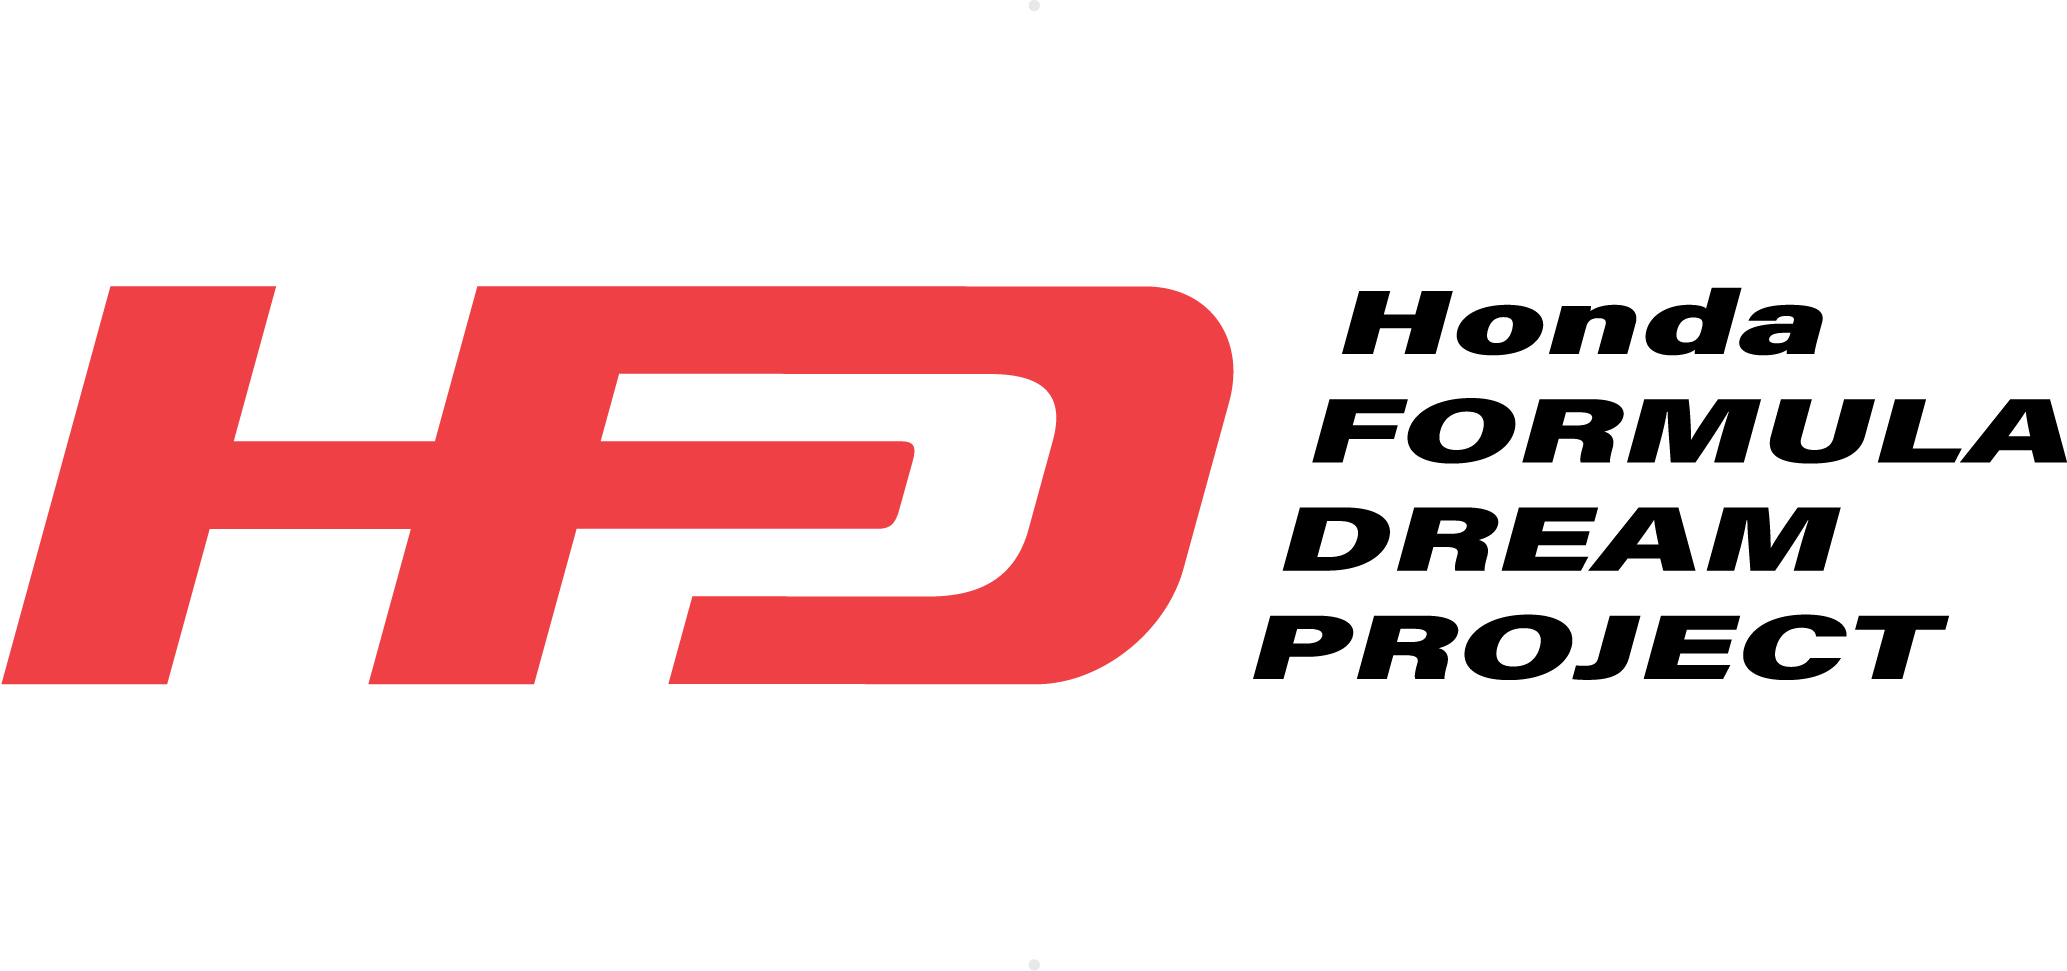 Honda Formula Dream Project logo